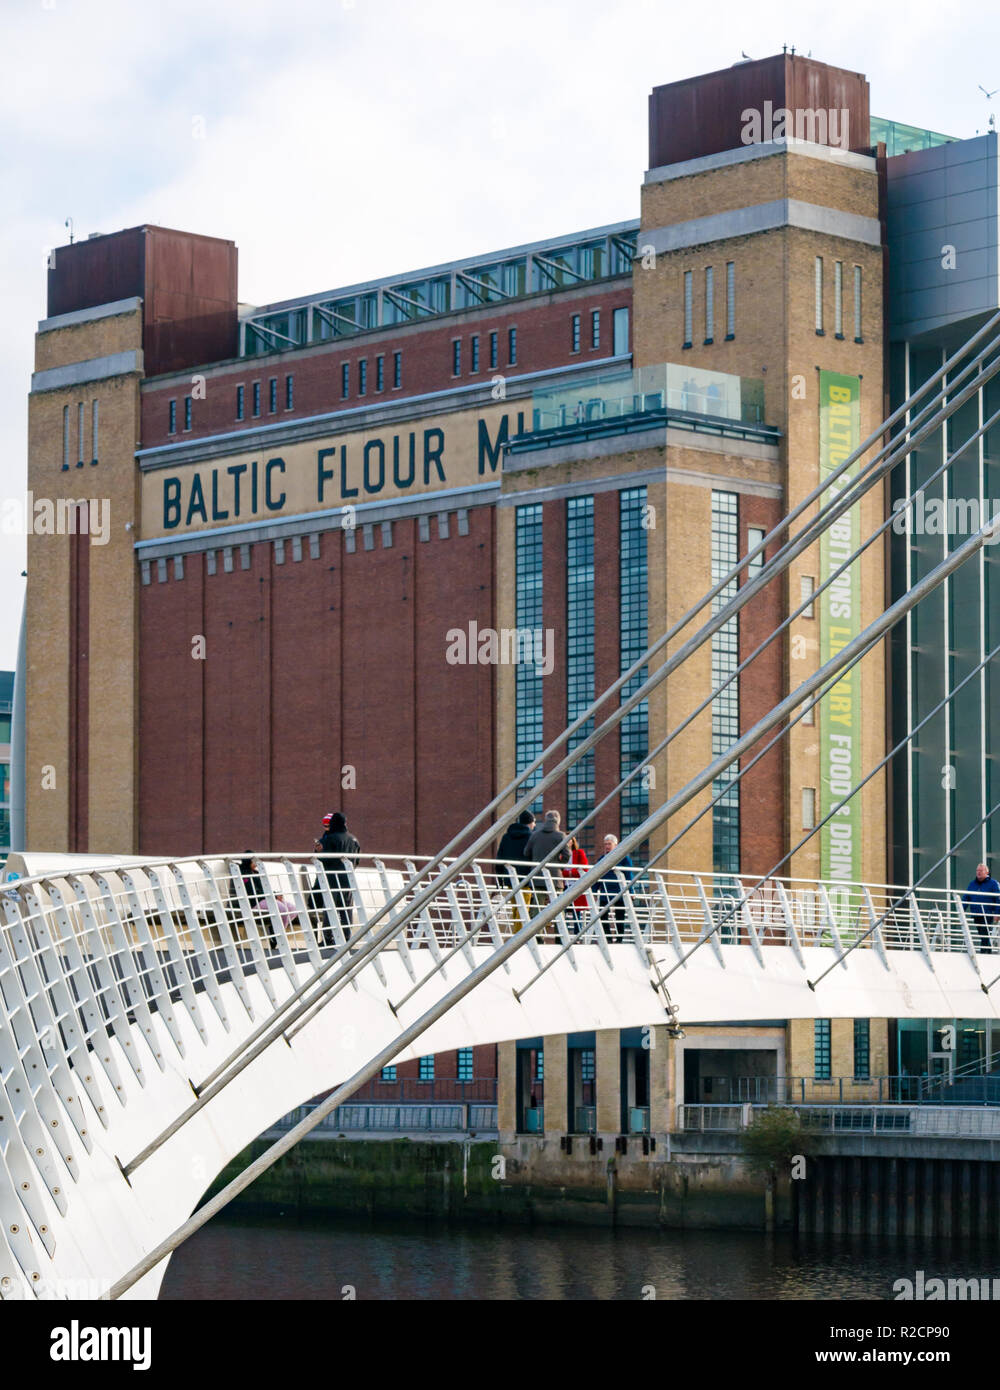 Baltic flour mill now art exhibition centre and pedestrian Gateshead Millennium Bridge, Newcastle Upon Tyne, England, UK Stock Photo